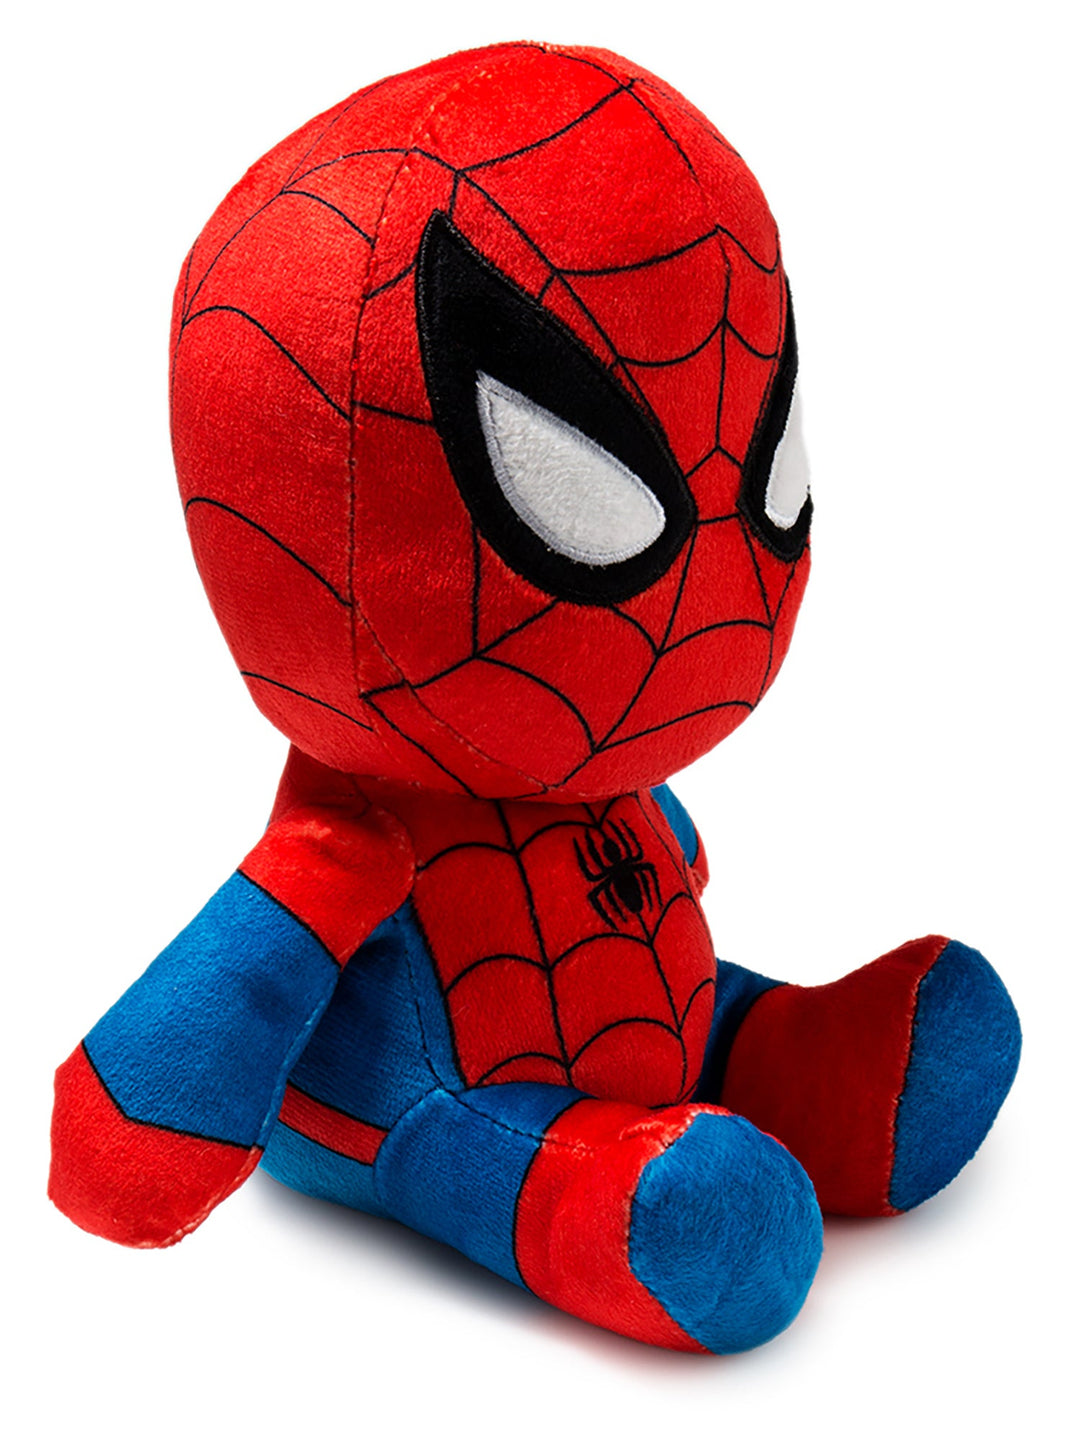 Classic Spider Man Sitting Plush Phunny Kidrobot Soft Toy